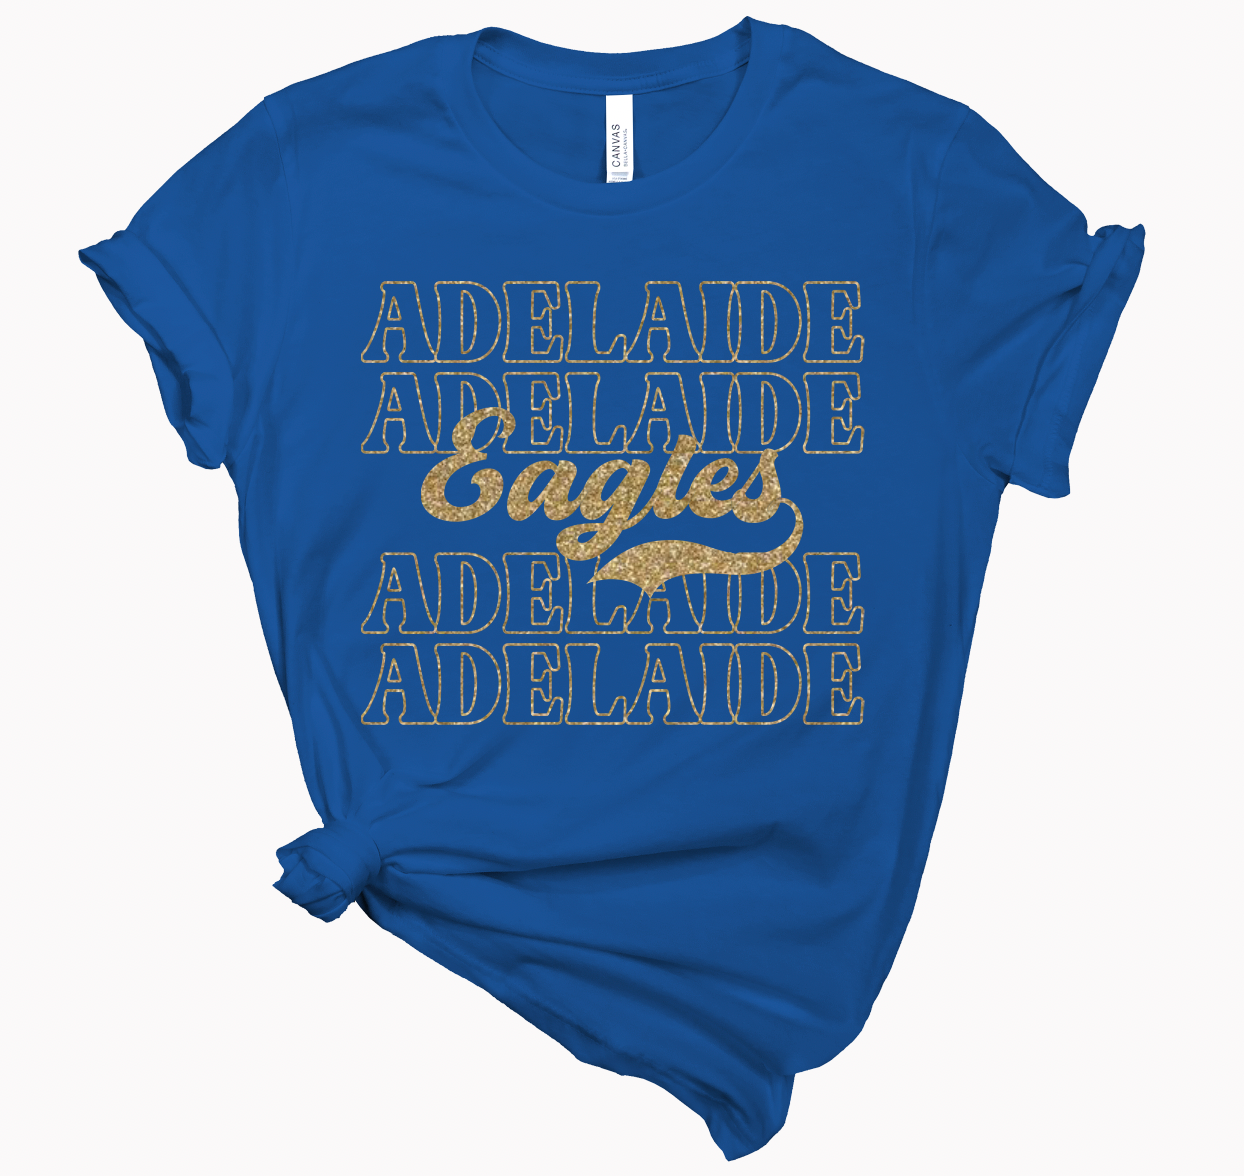 Adelaide Eagles Glitter T-Shirt | Toddler - Adult